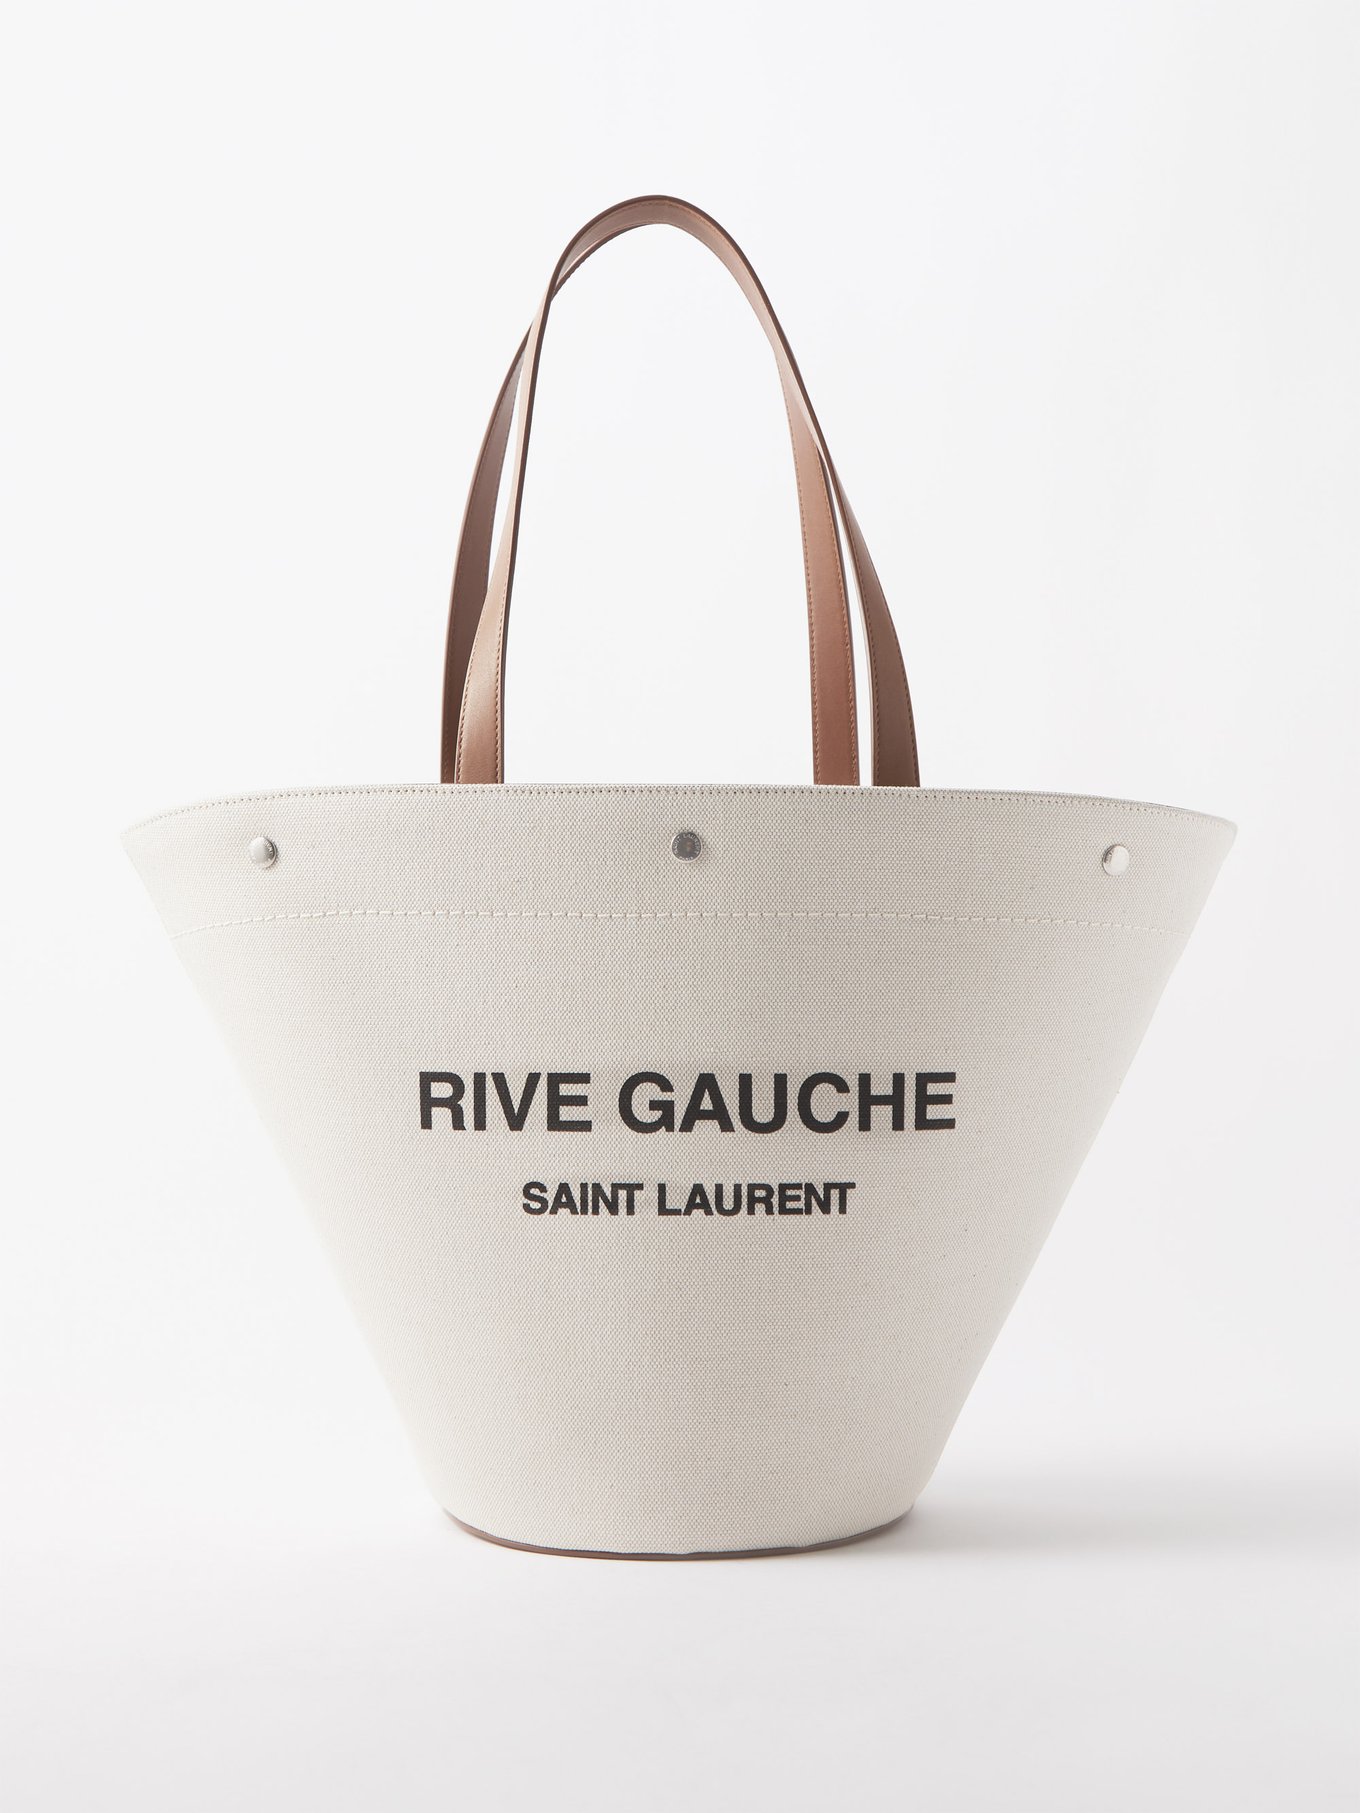 Saint Laurent Rive Gauche Tote Bag Left Bank Shopping Bag from